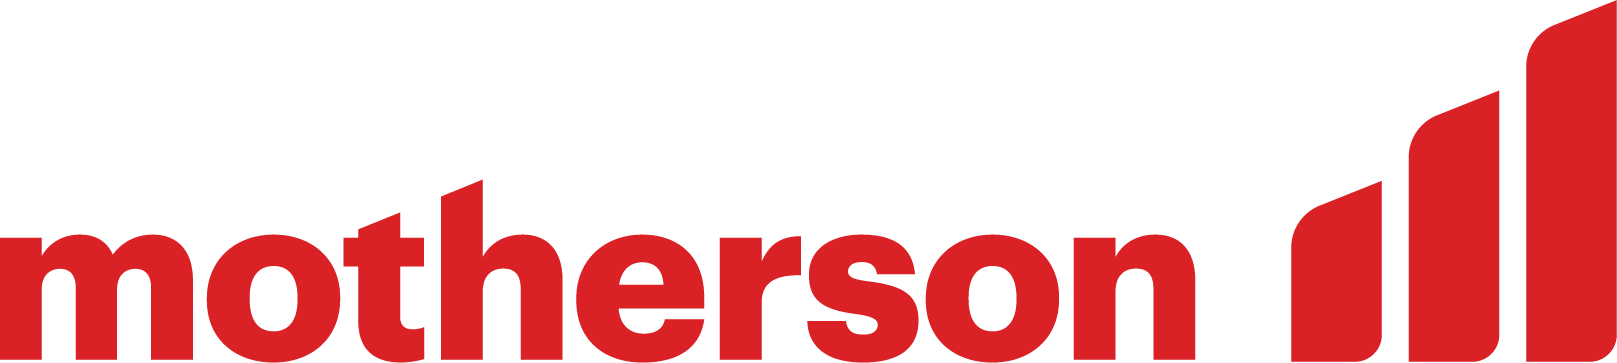 motherson logo